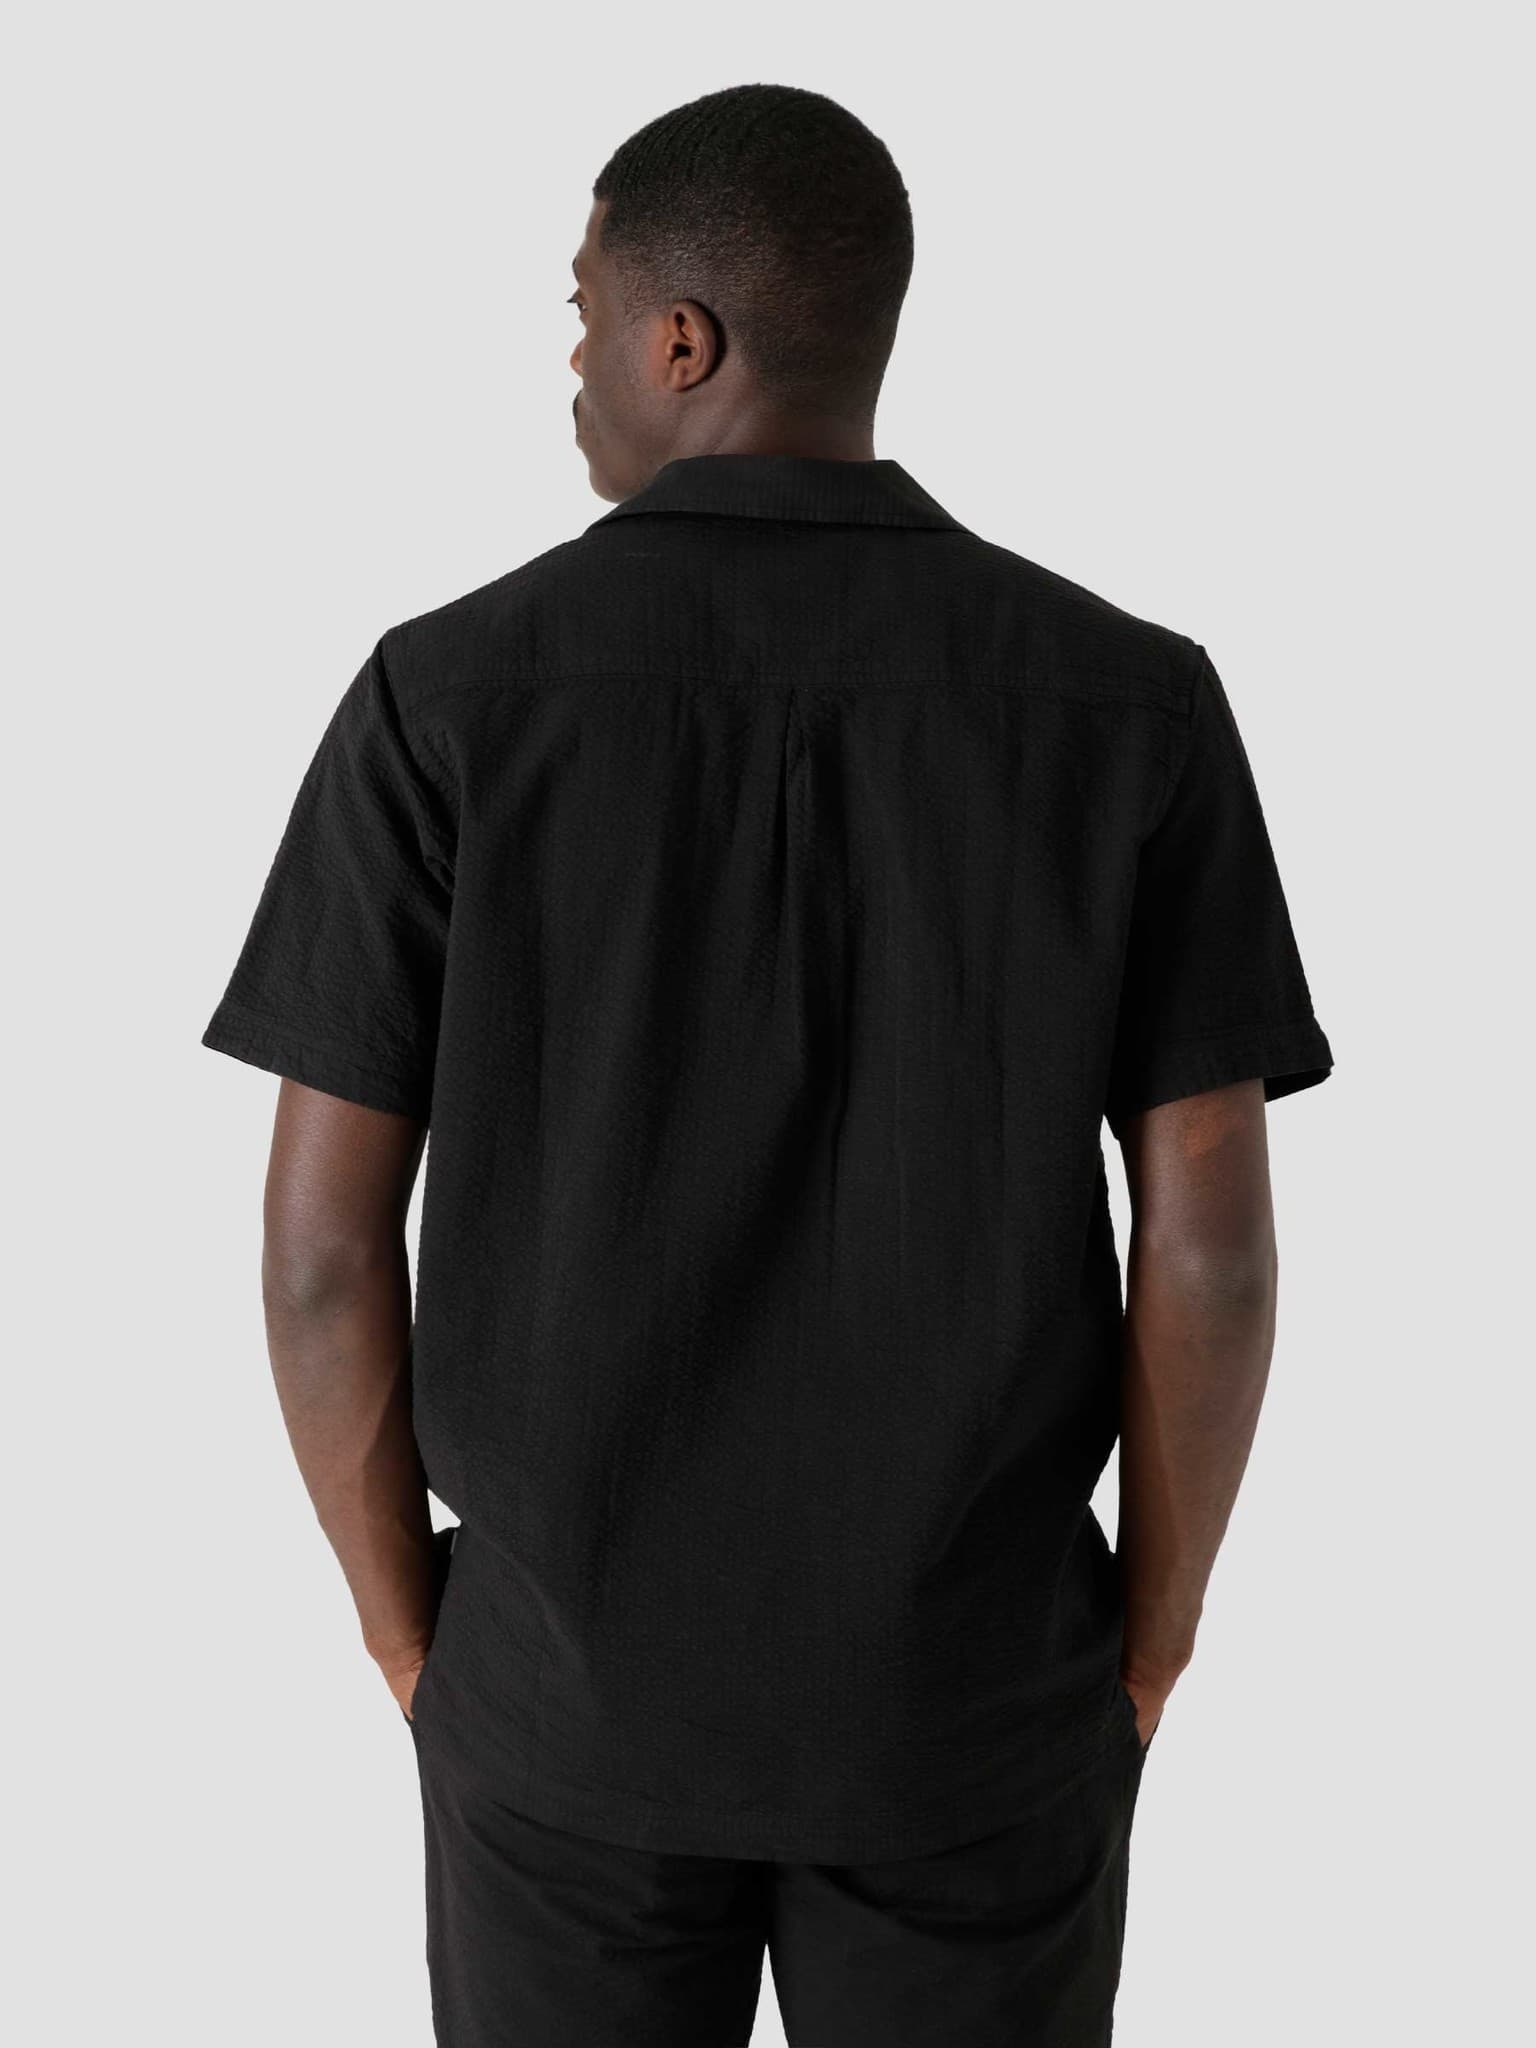 QB46 Seersucker Shirt Black